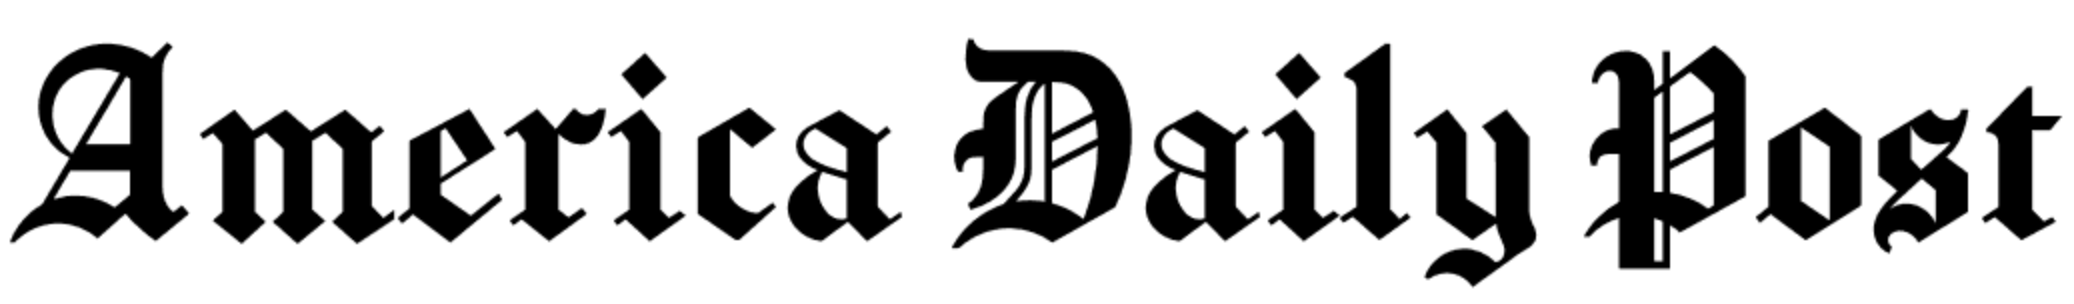 America Daily Post logo